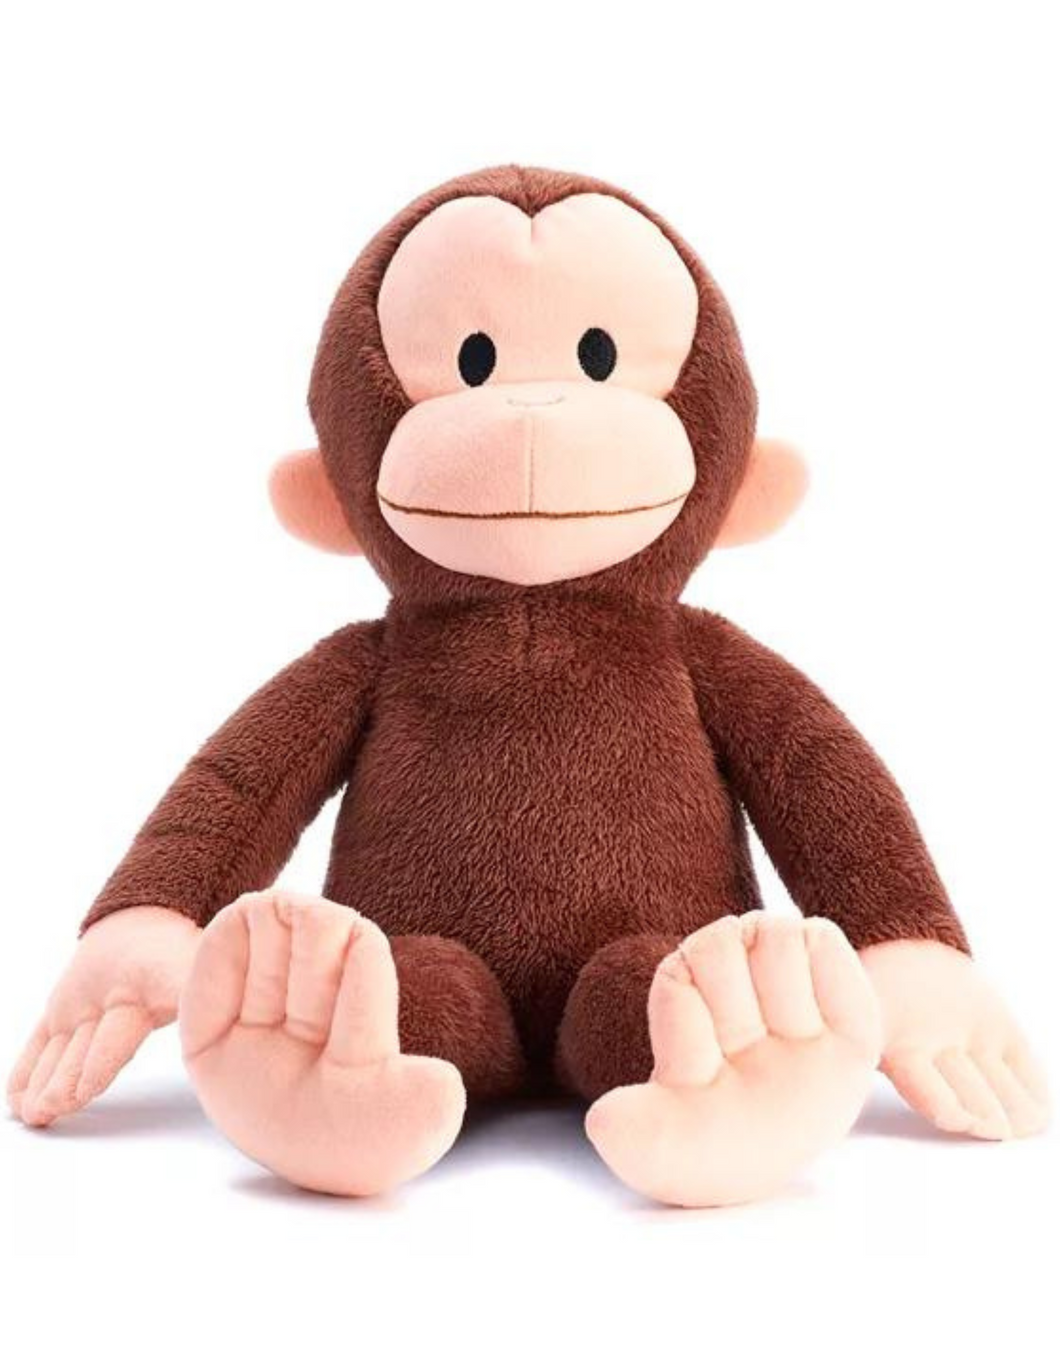 Curious George Plush Monkey